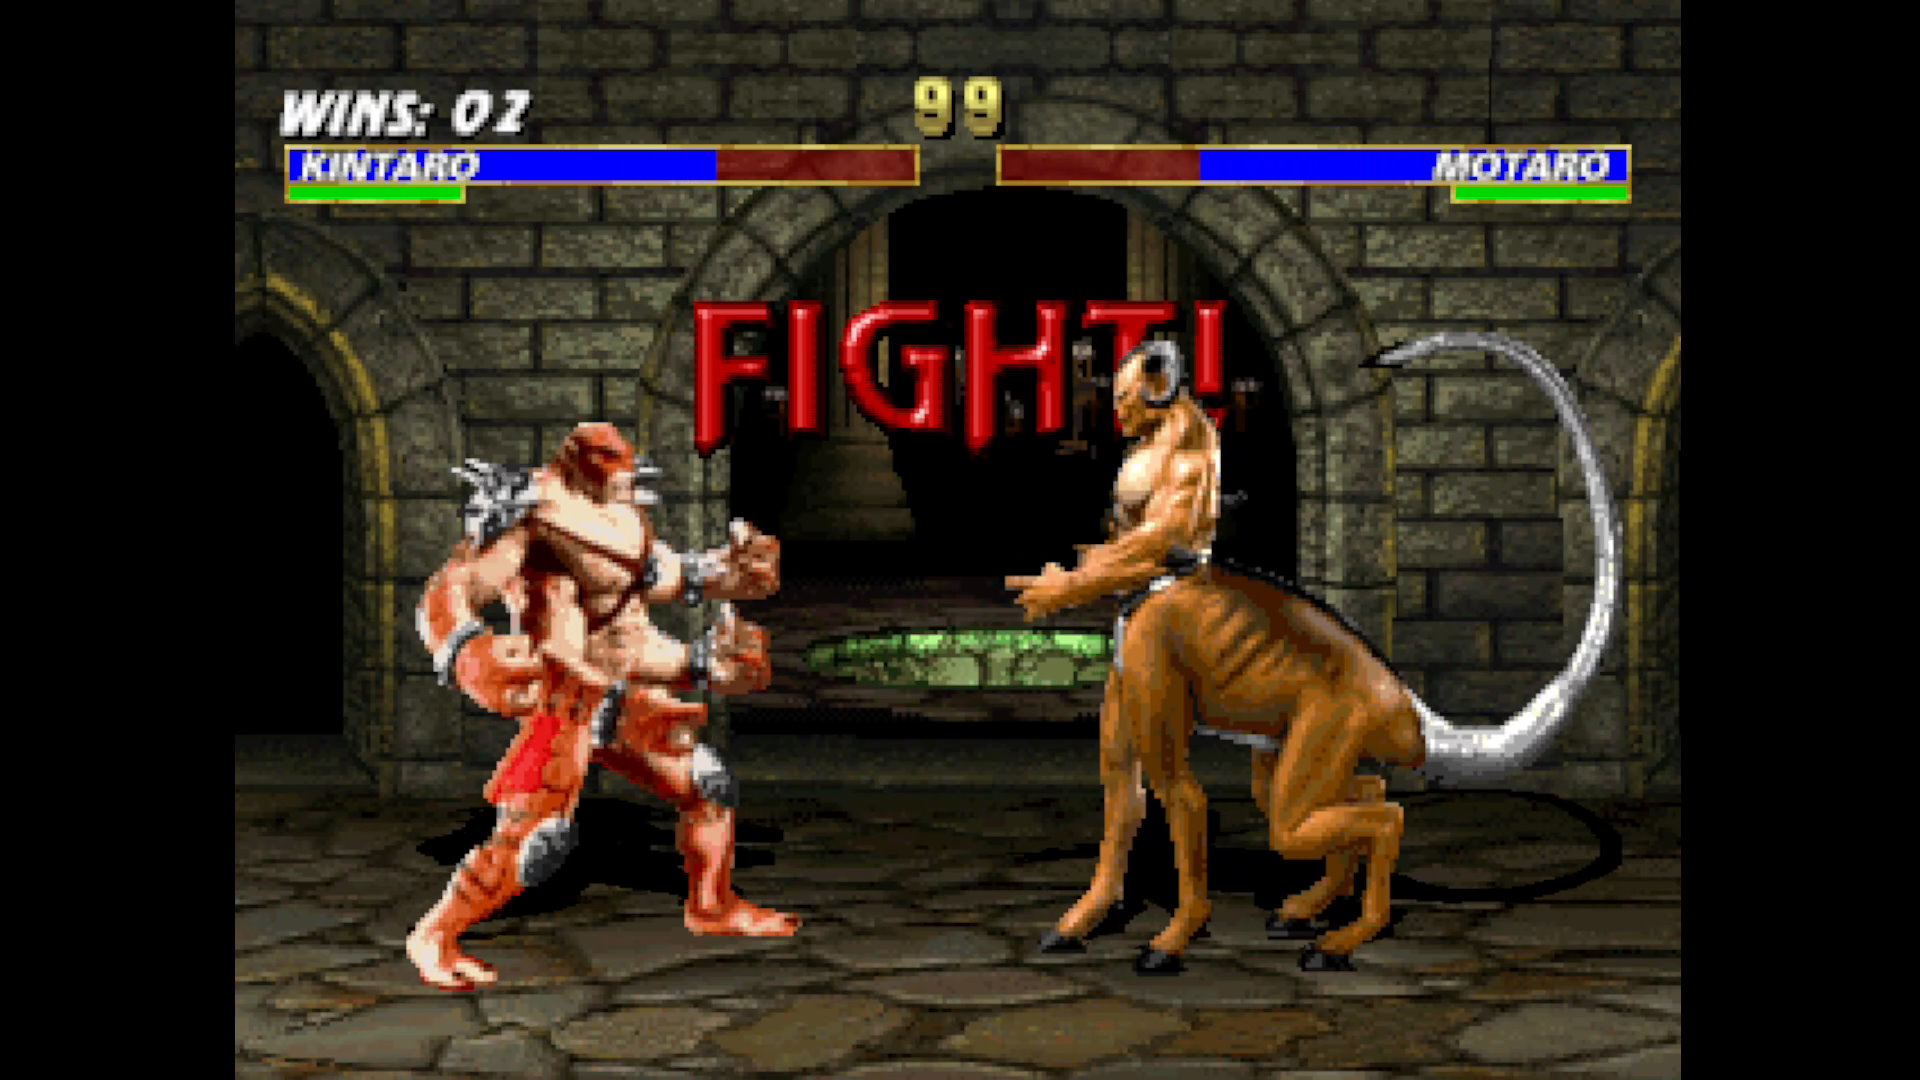 Mortal Kombat Trilogy [N64, PC, PS1, SS] – Cyrax (Shark) / Various